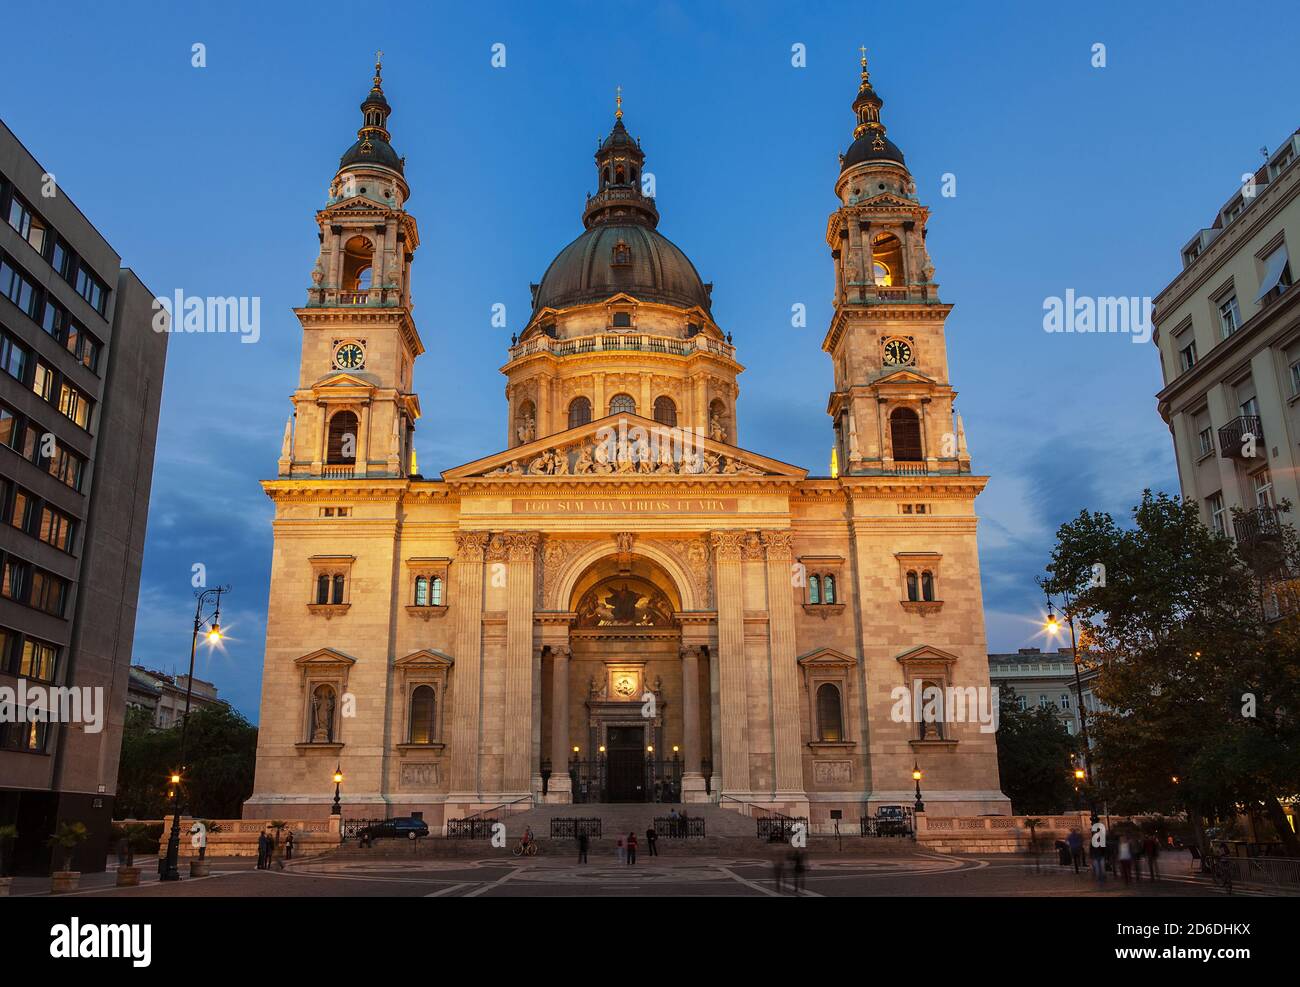 Illuminated St. Stephen's Basilica on St. Stephen's square evening shot in Pest part of Budapest, Hungary Stock Photo